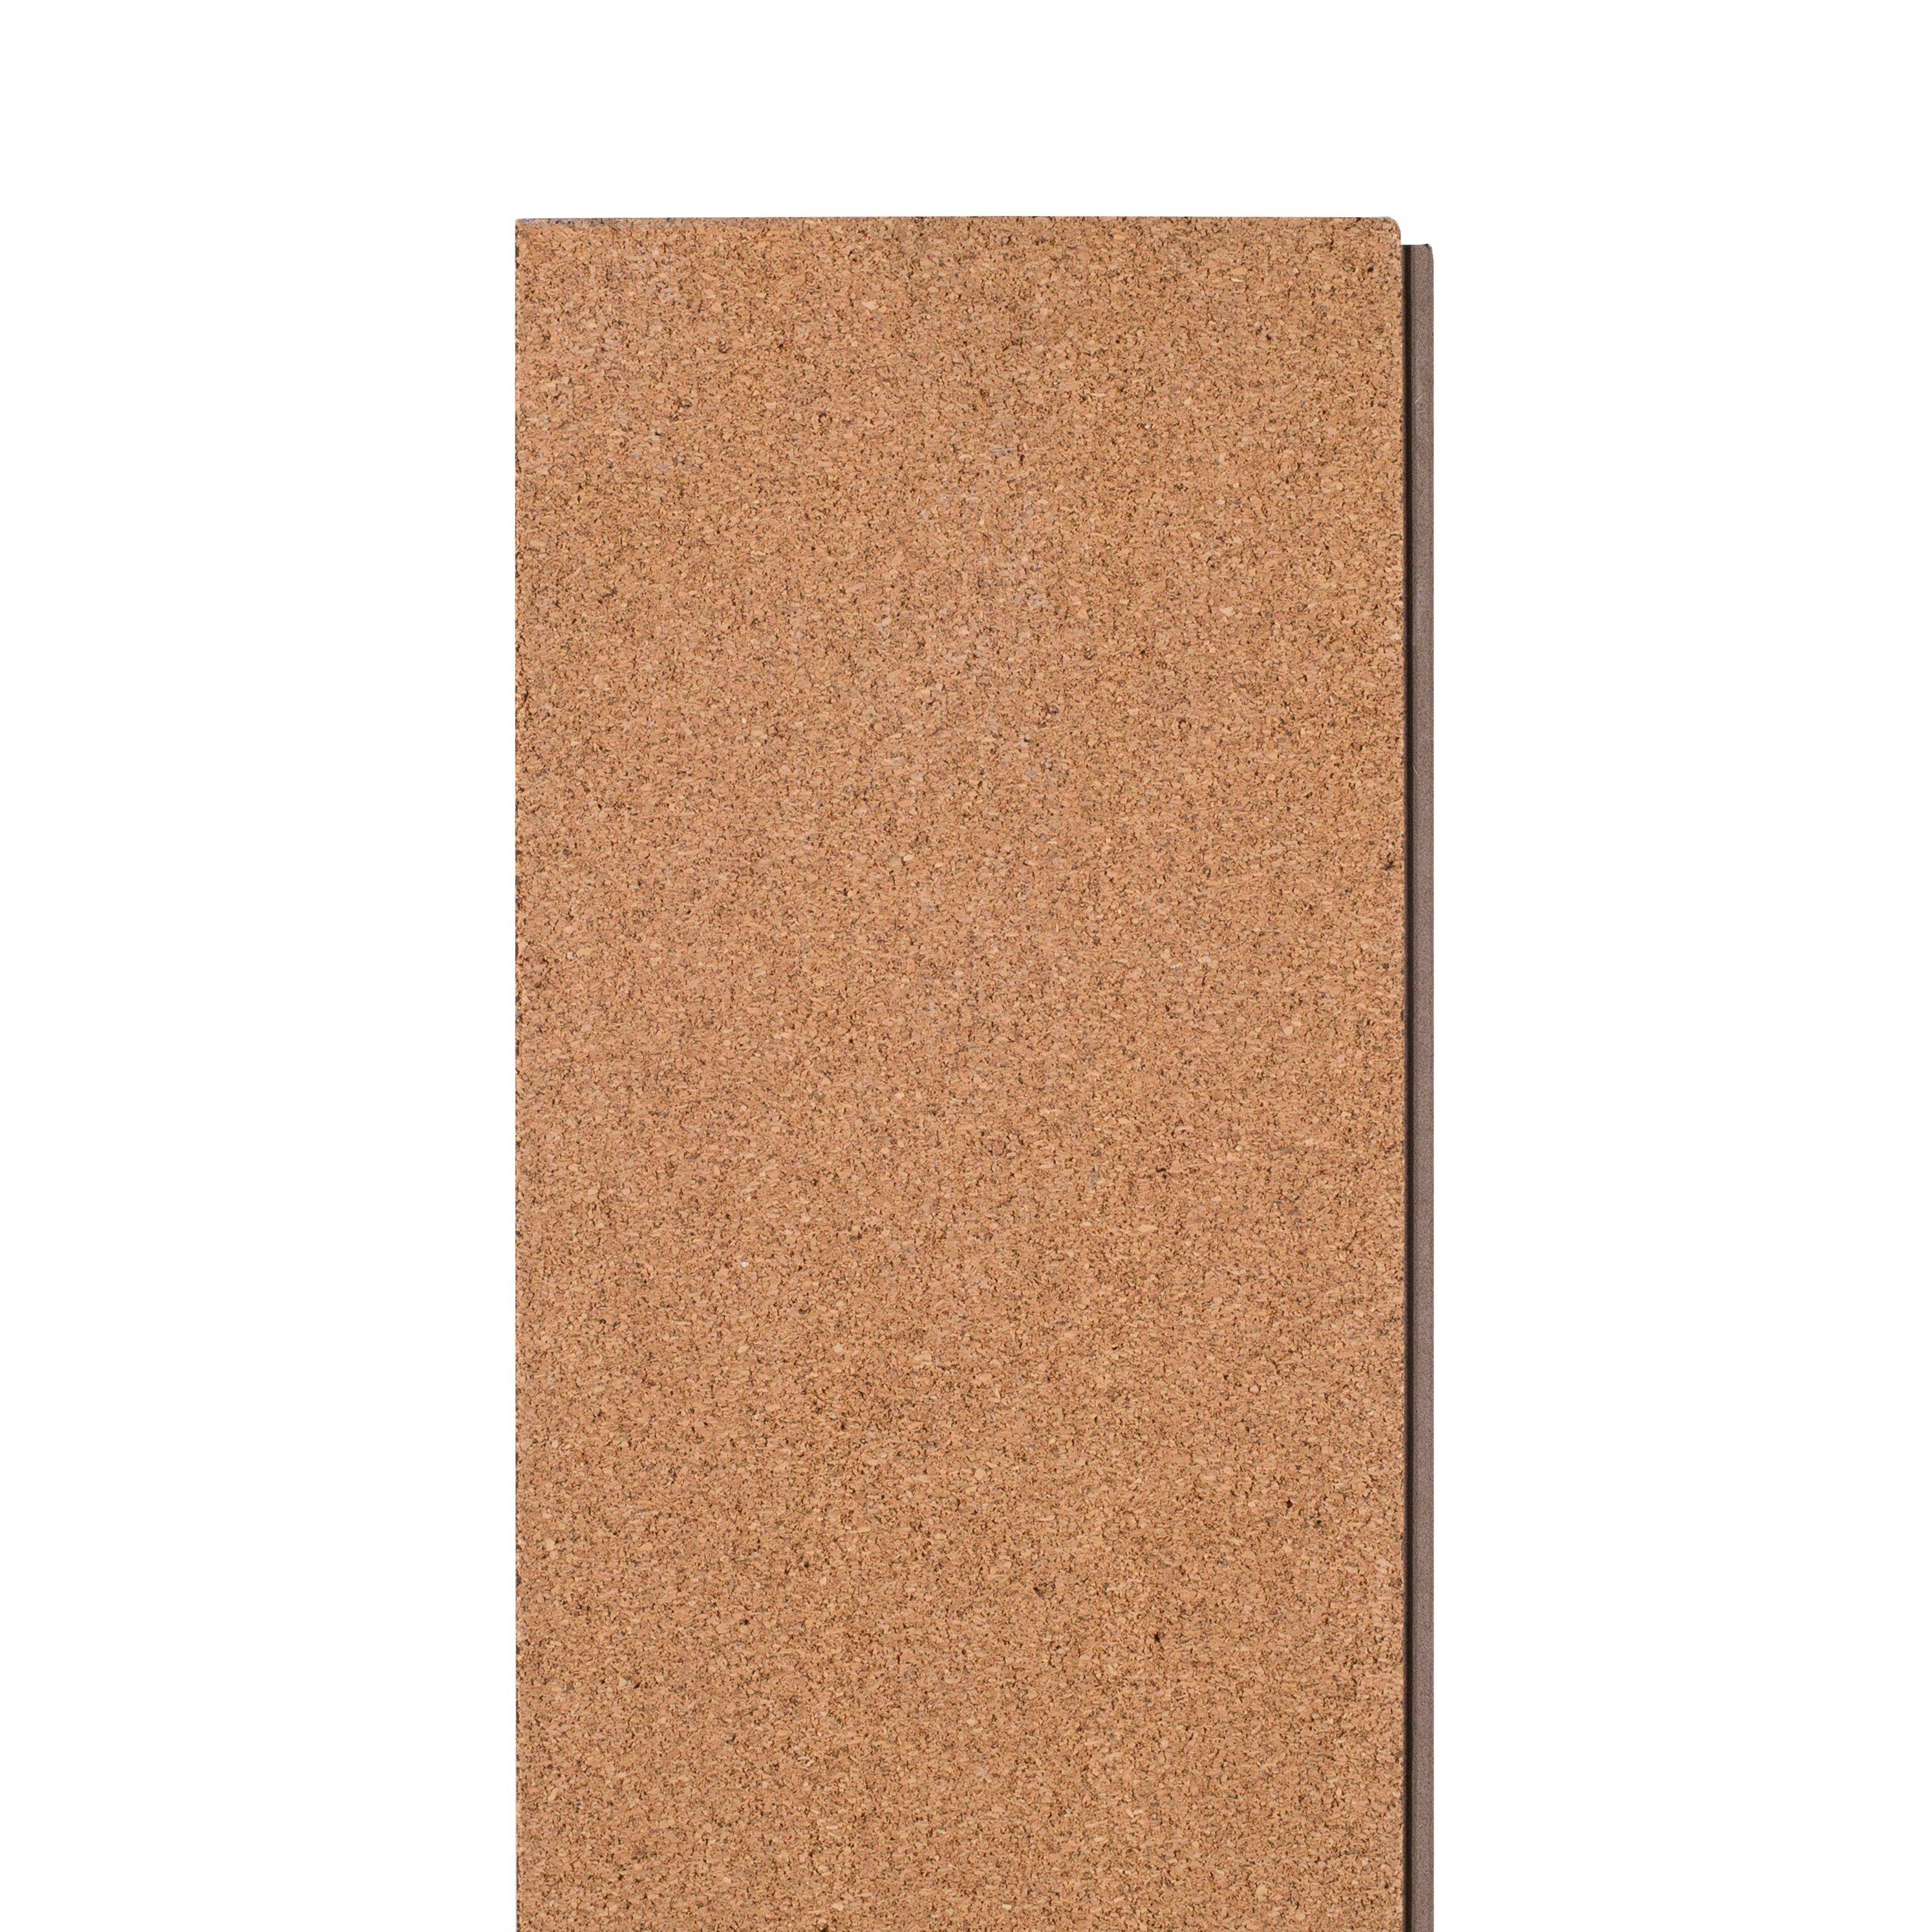 Fairbanks Rigid Core Luxury Vinyl Plank - Cork Back